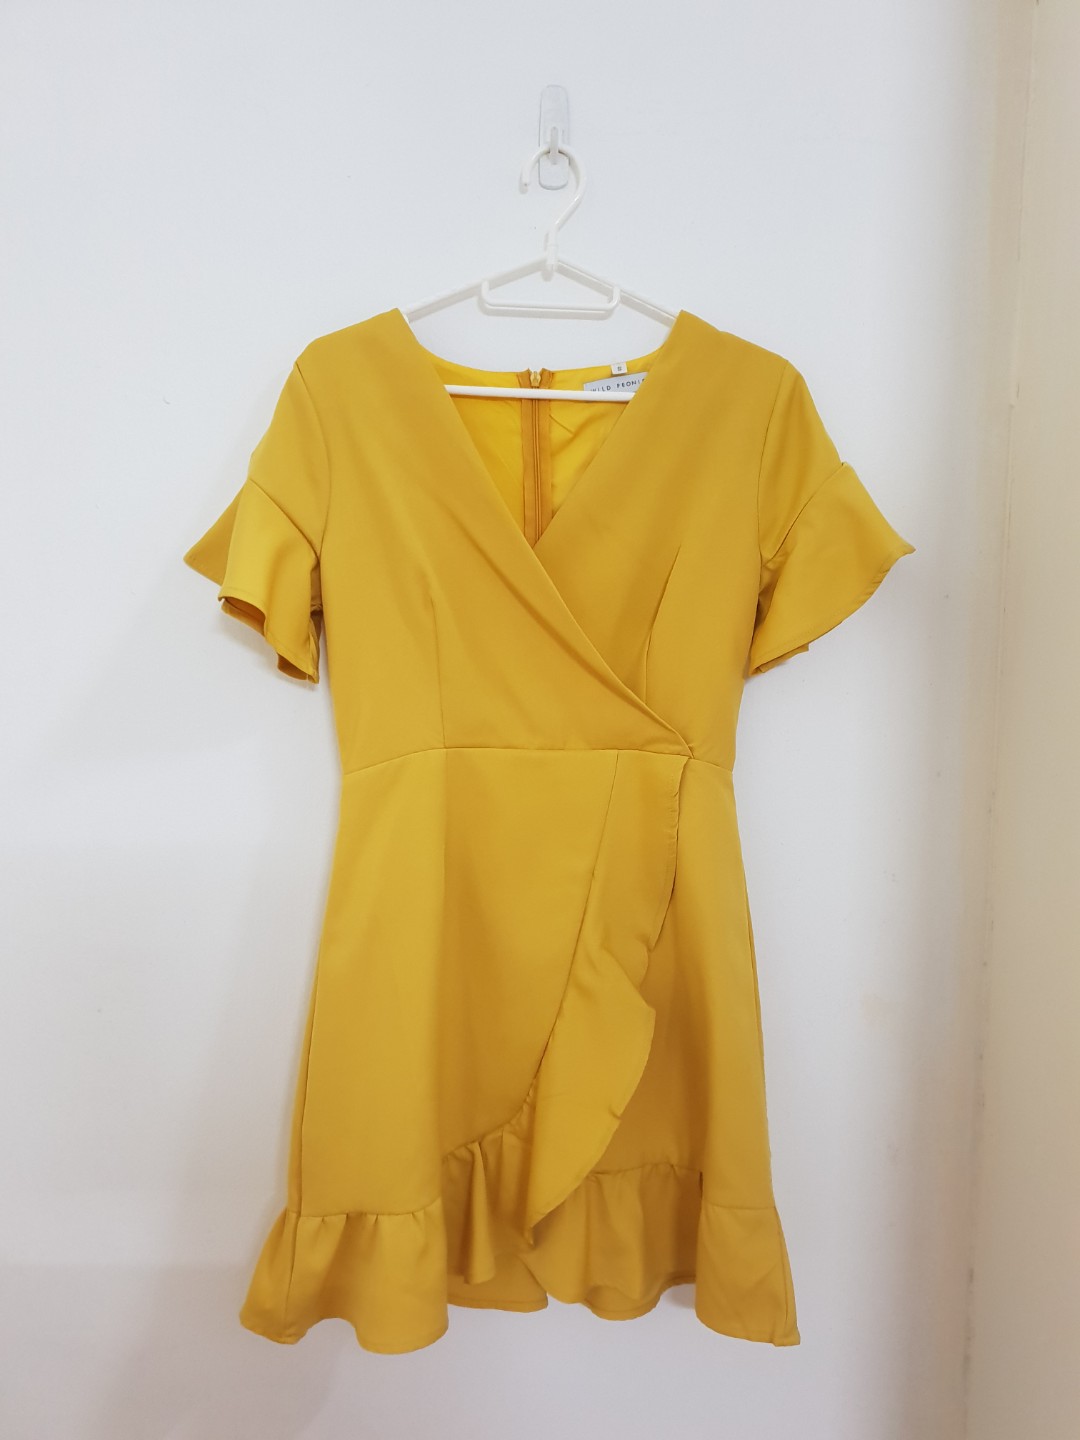 mustard yellow casual dress, women's fashion, tops, sleeveless on